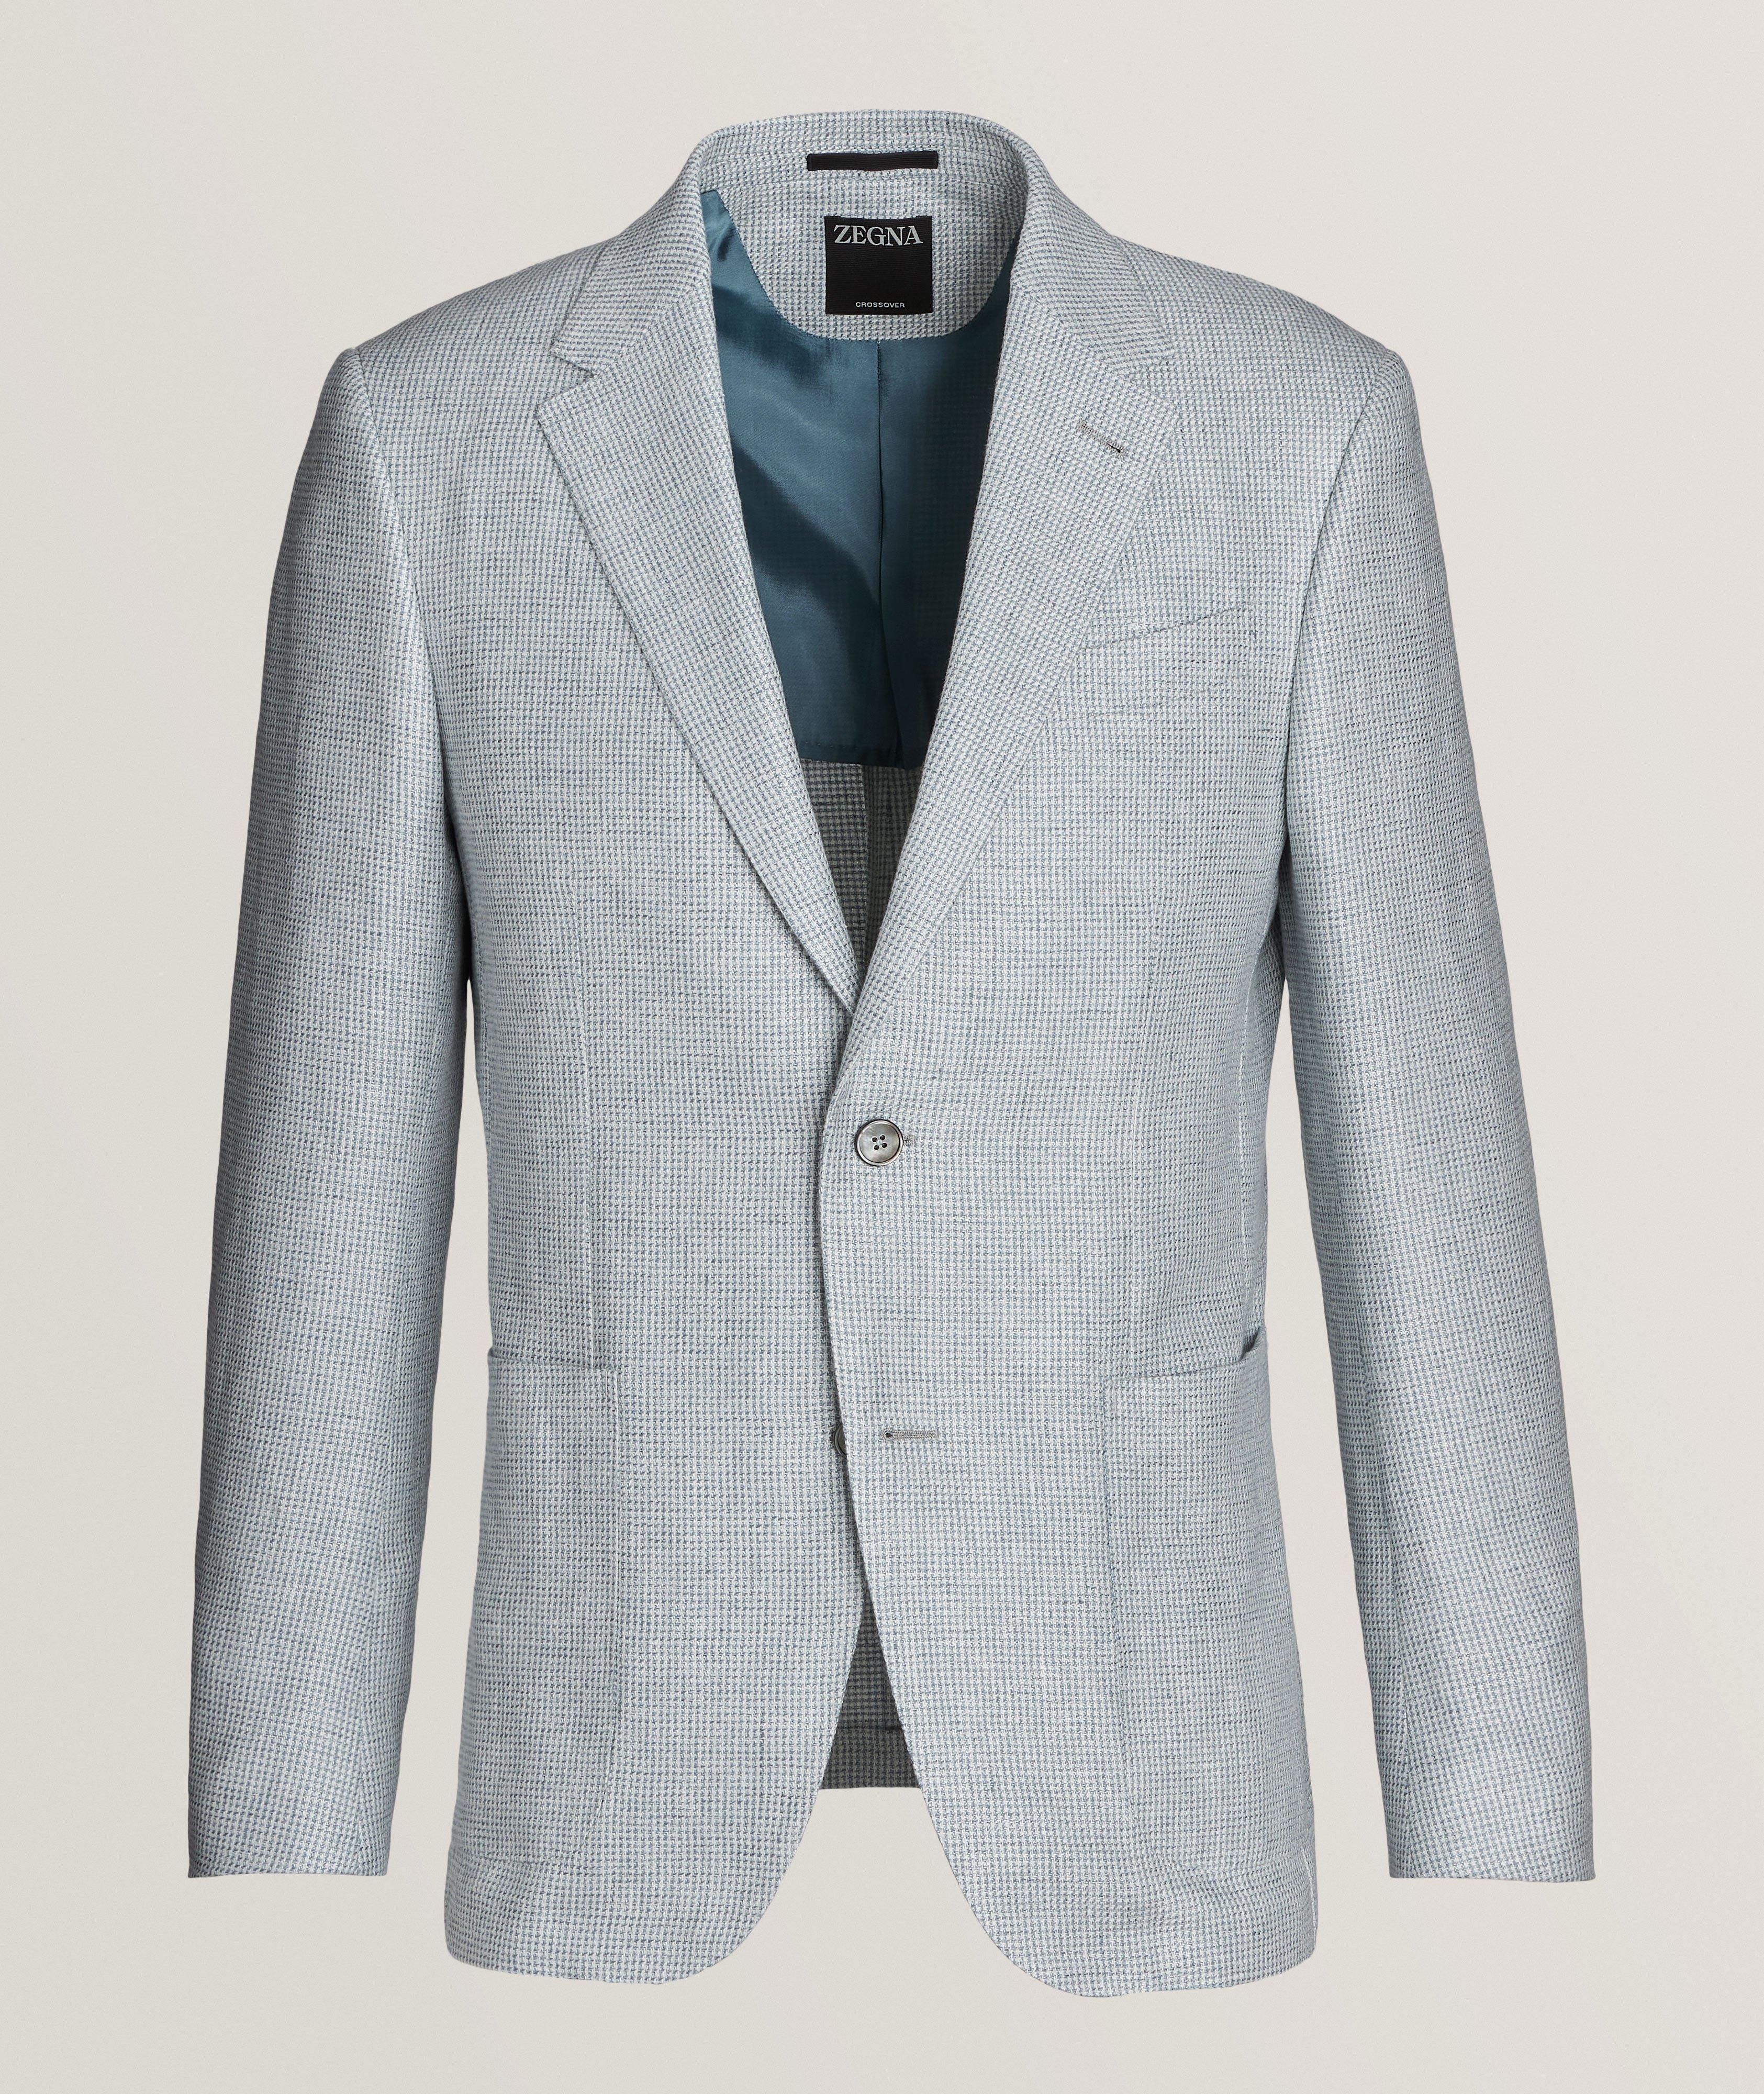 Zegna Crossover Micro Textured Linen, Wool & Silk Sport Jacket